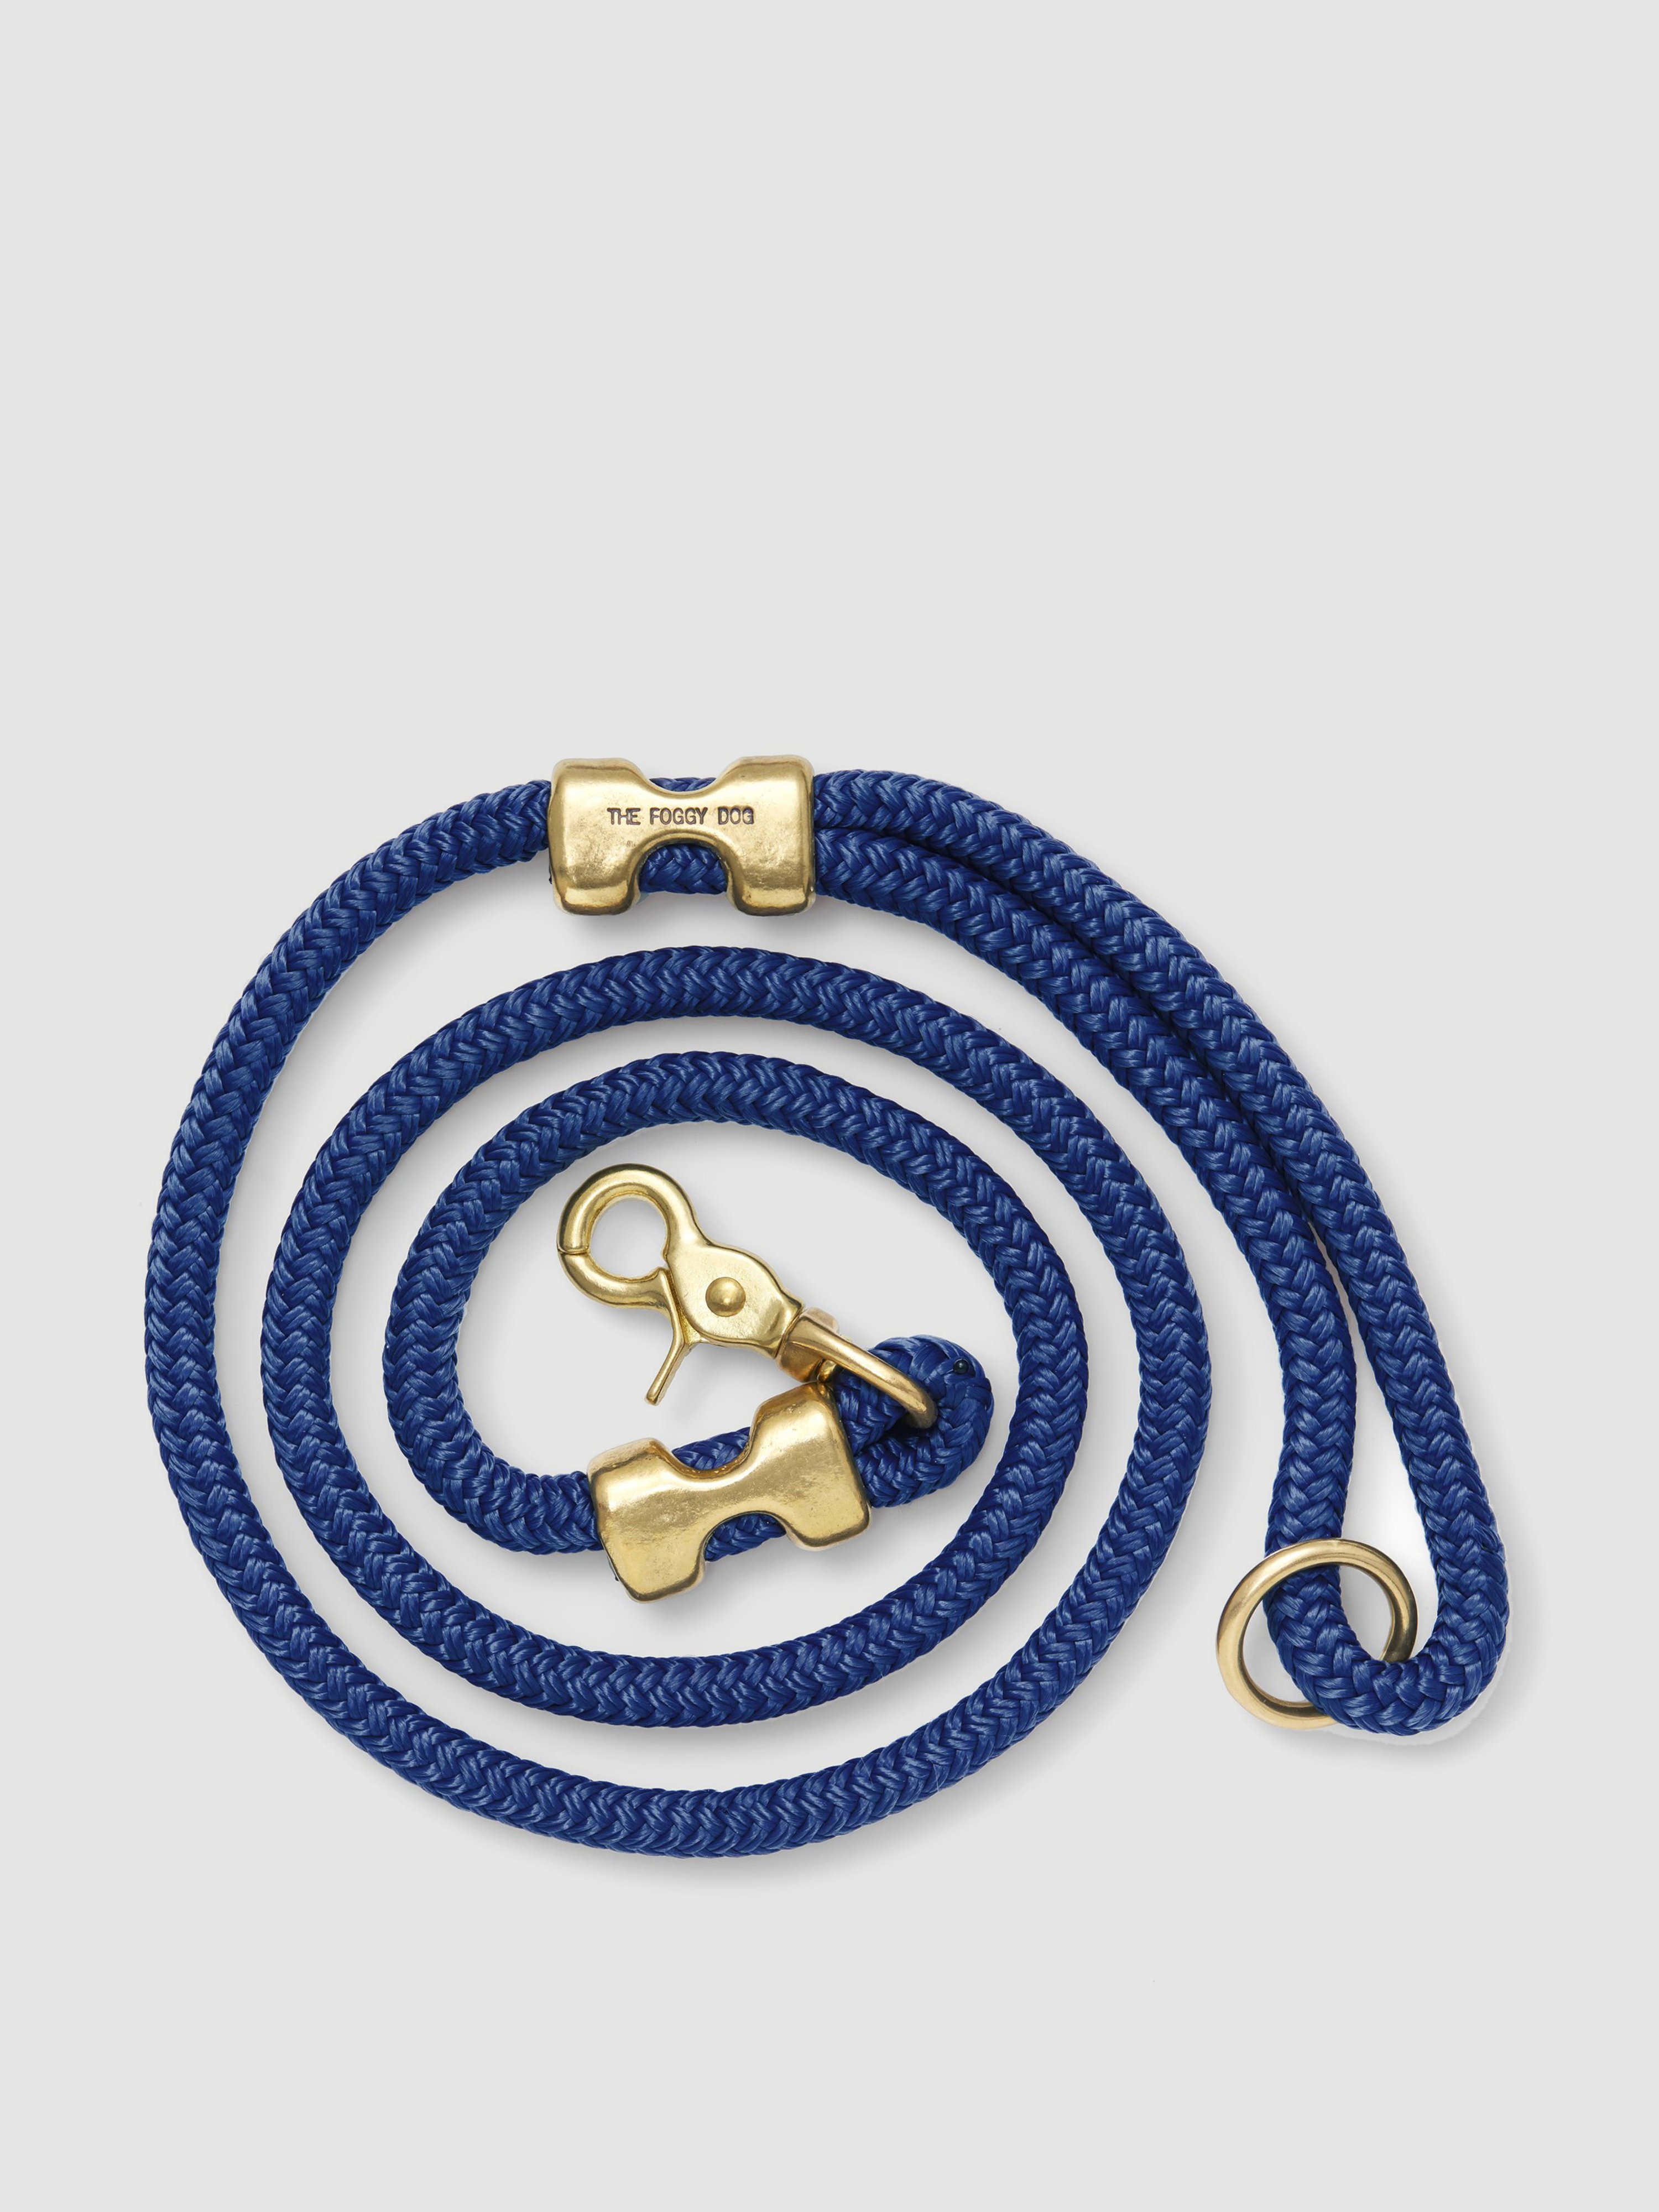 The Foggy Dog Ocean Marine Rope Dog Leash In Blue